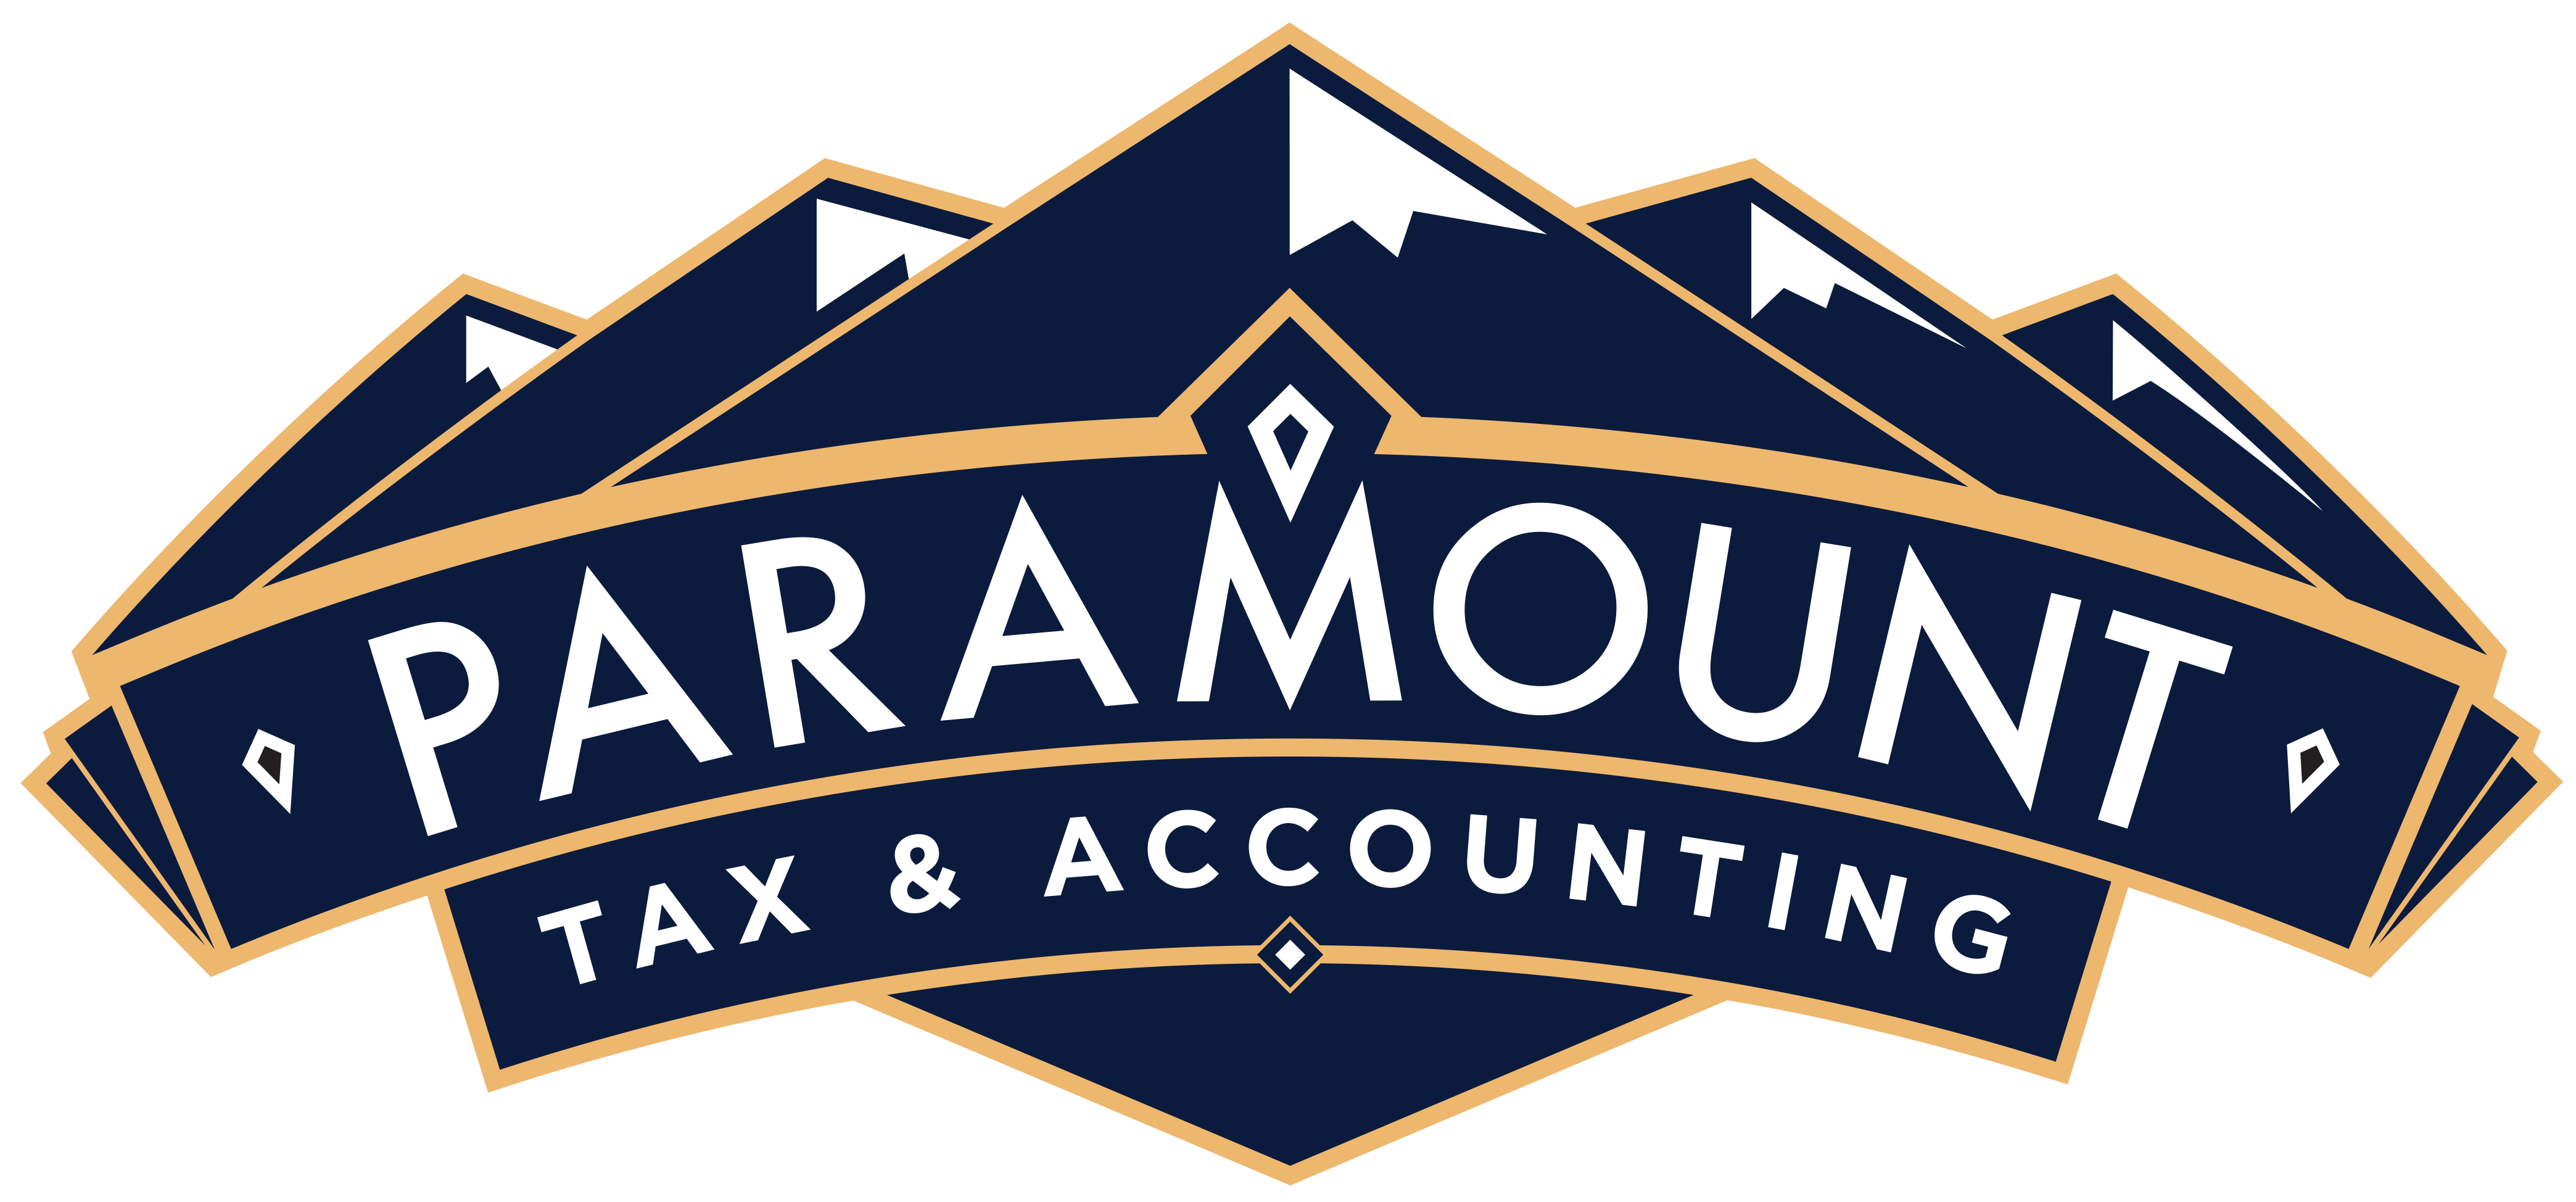 Review Paramount Tax & Accounting Gilbert